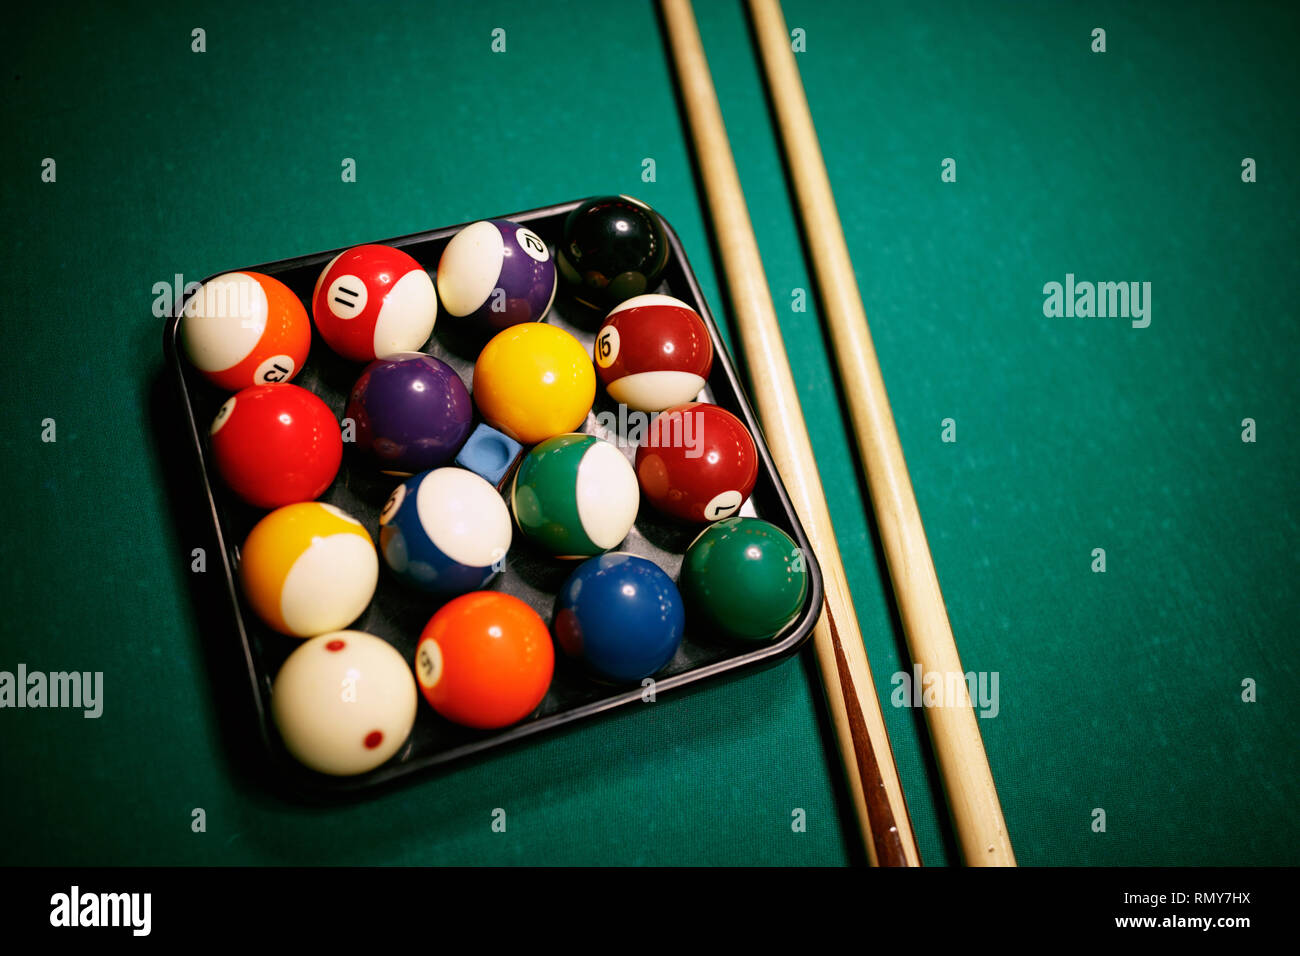 Billiard balls pool on green table beginning game Stock Photo